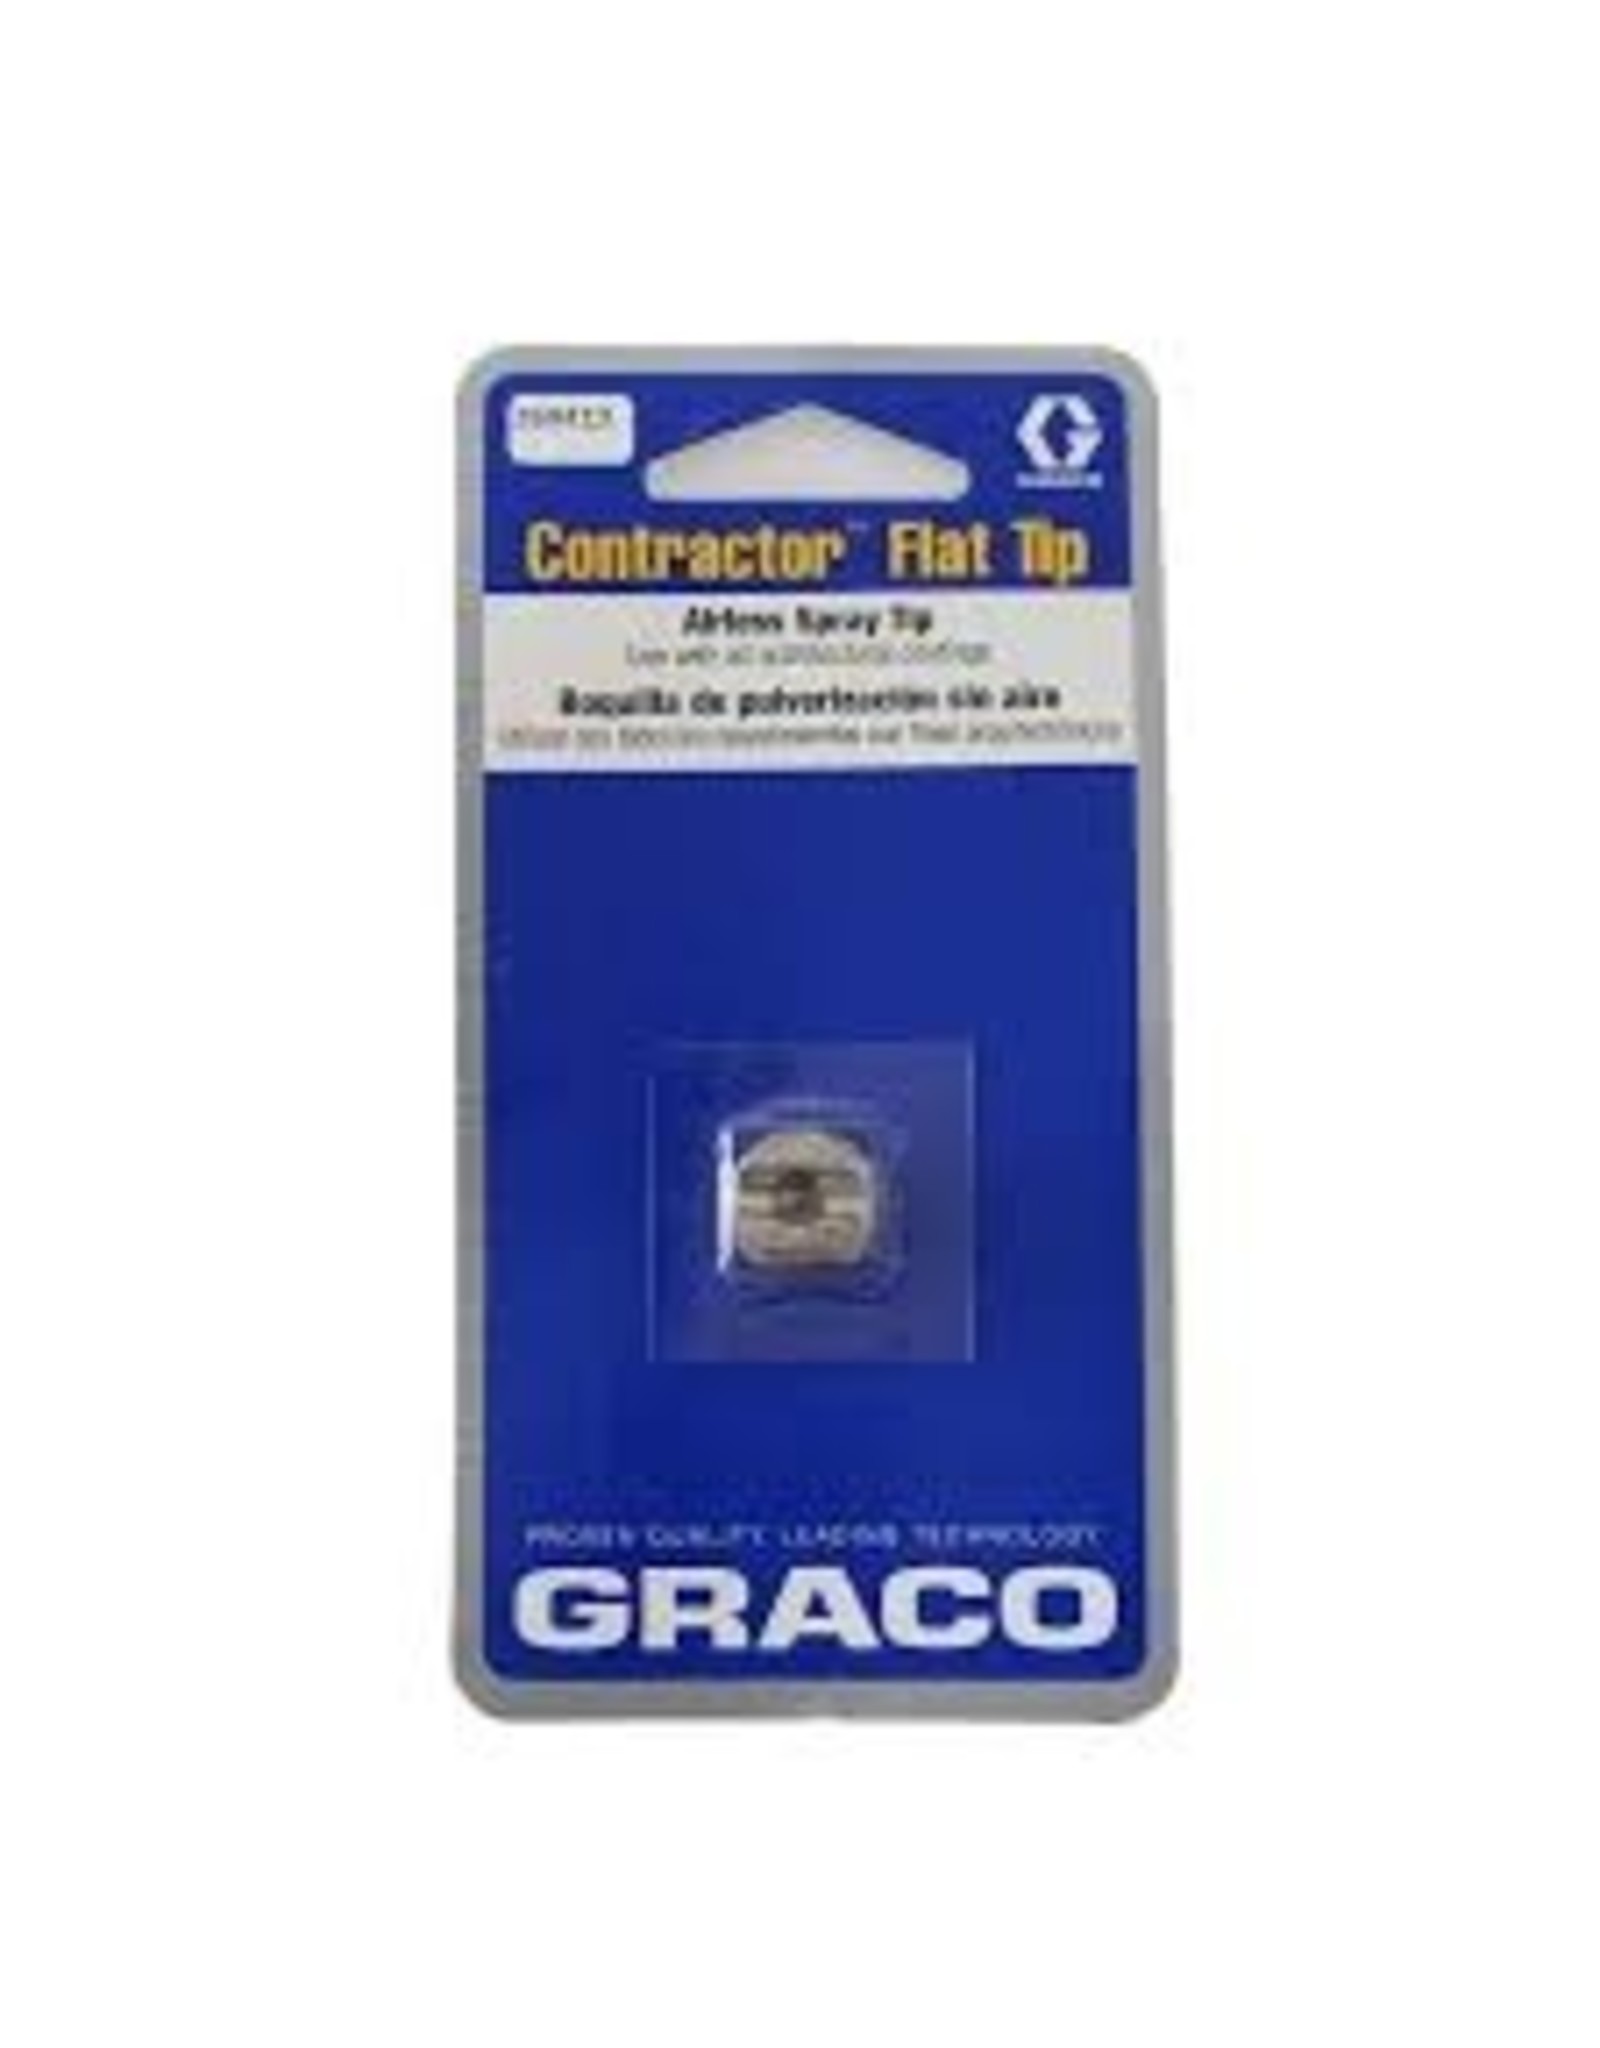 Graco 269623 Contractor Flat Tip